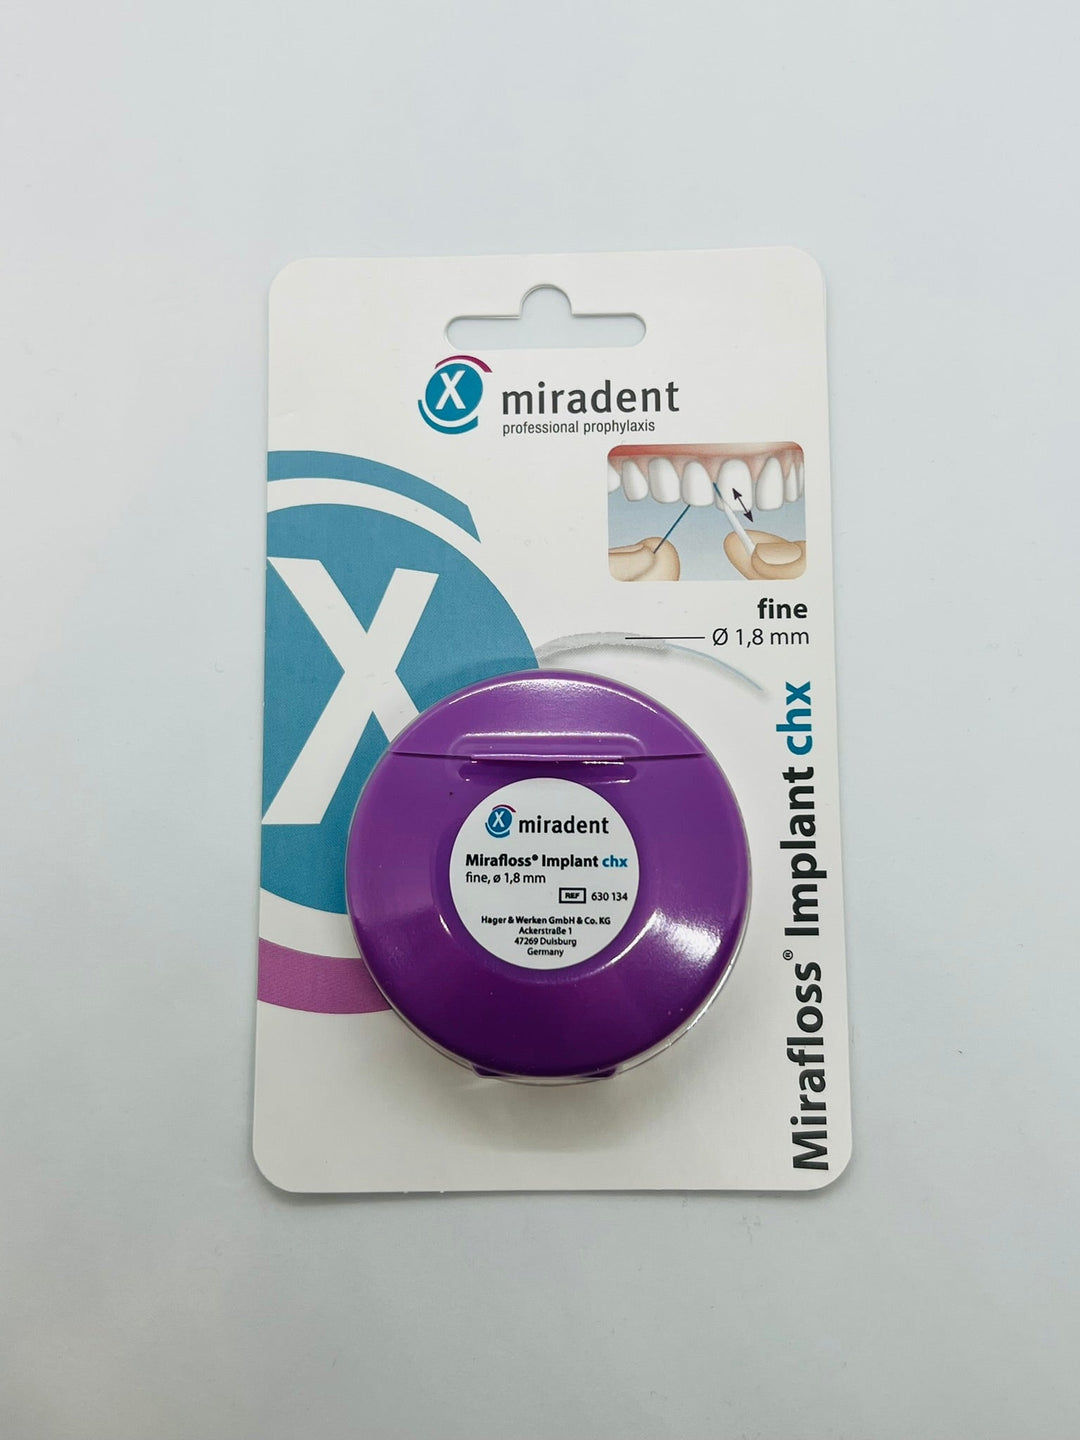 Miradent Mirafloss Implant